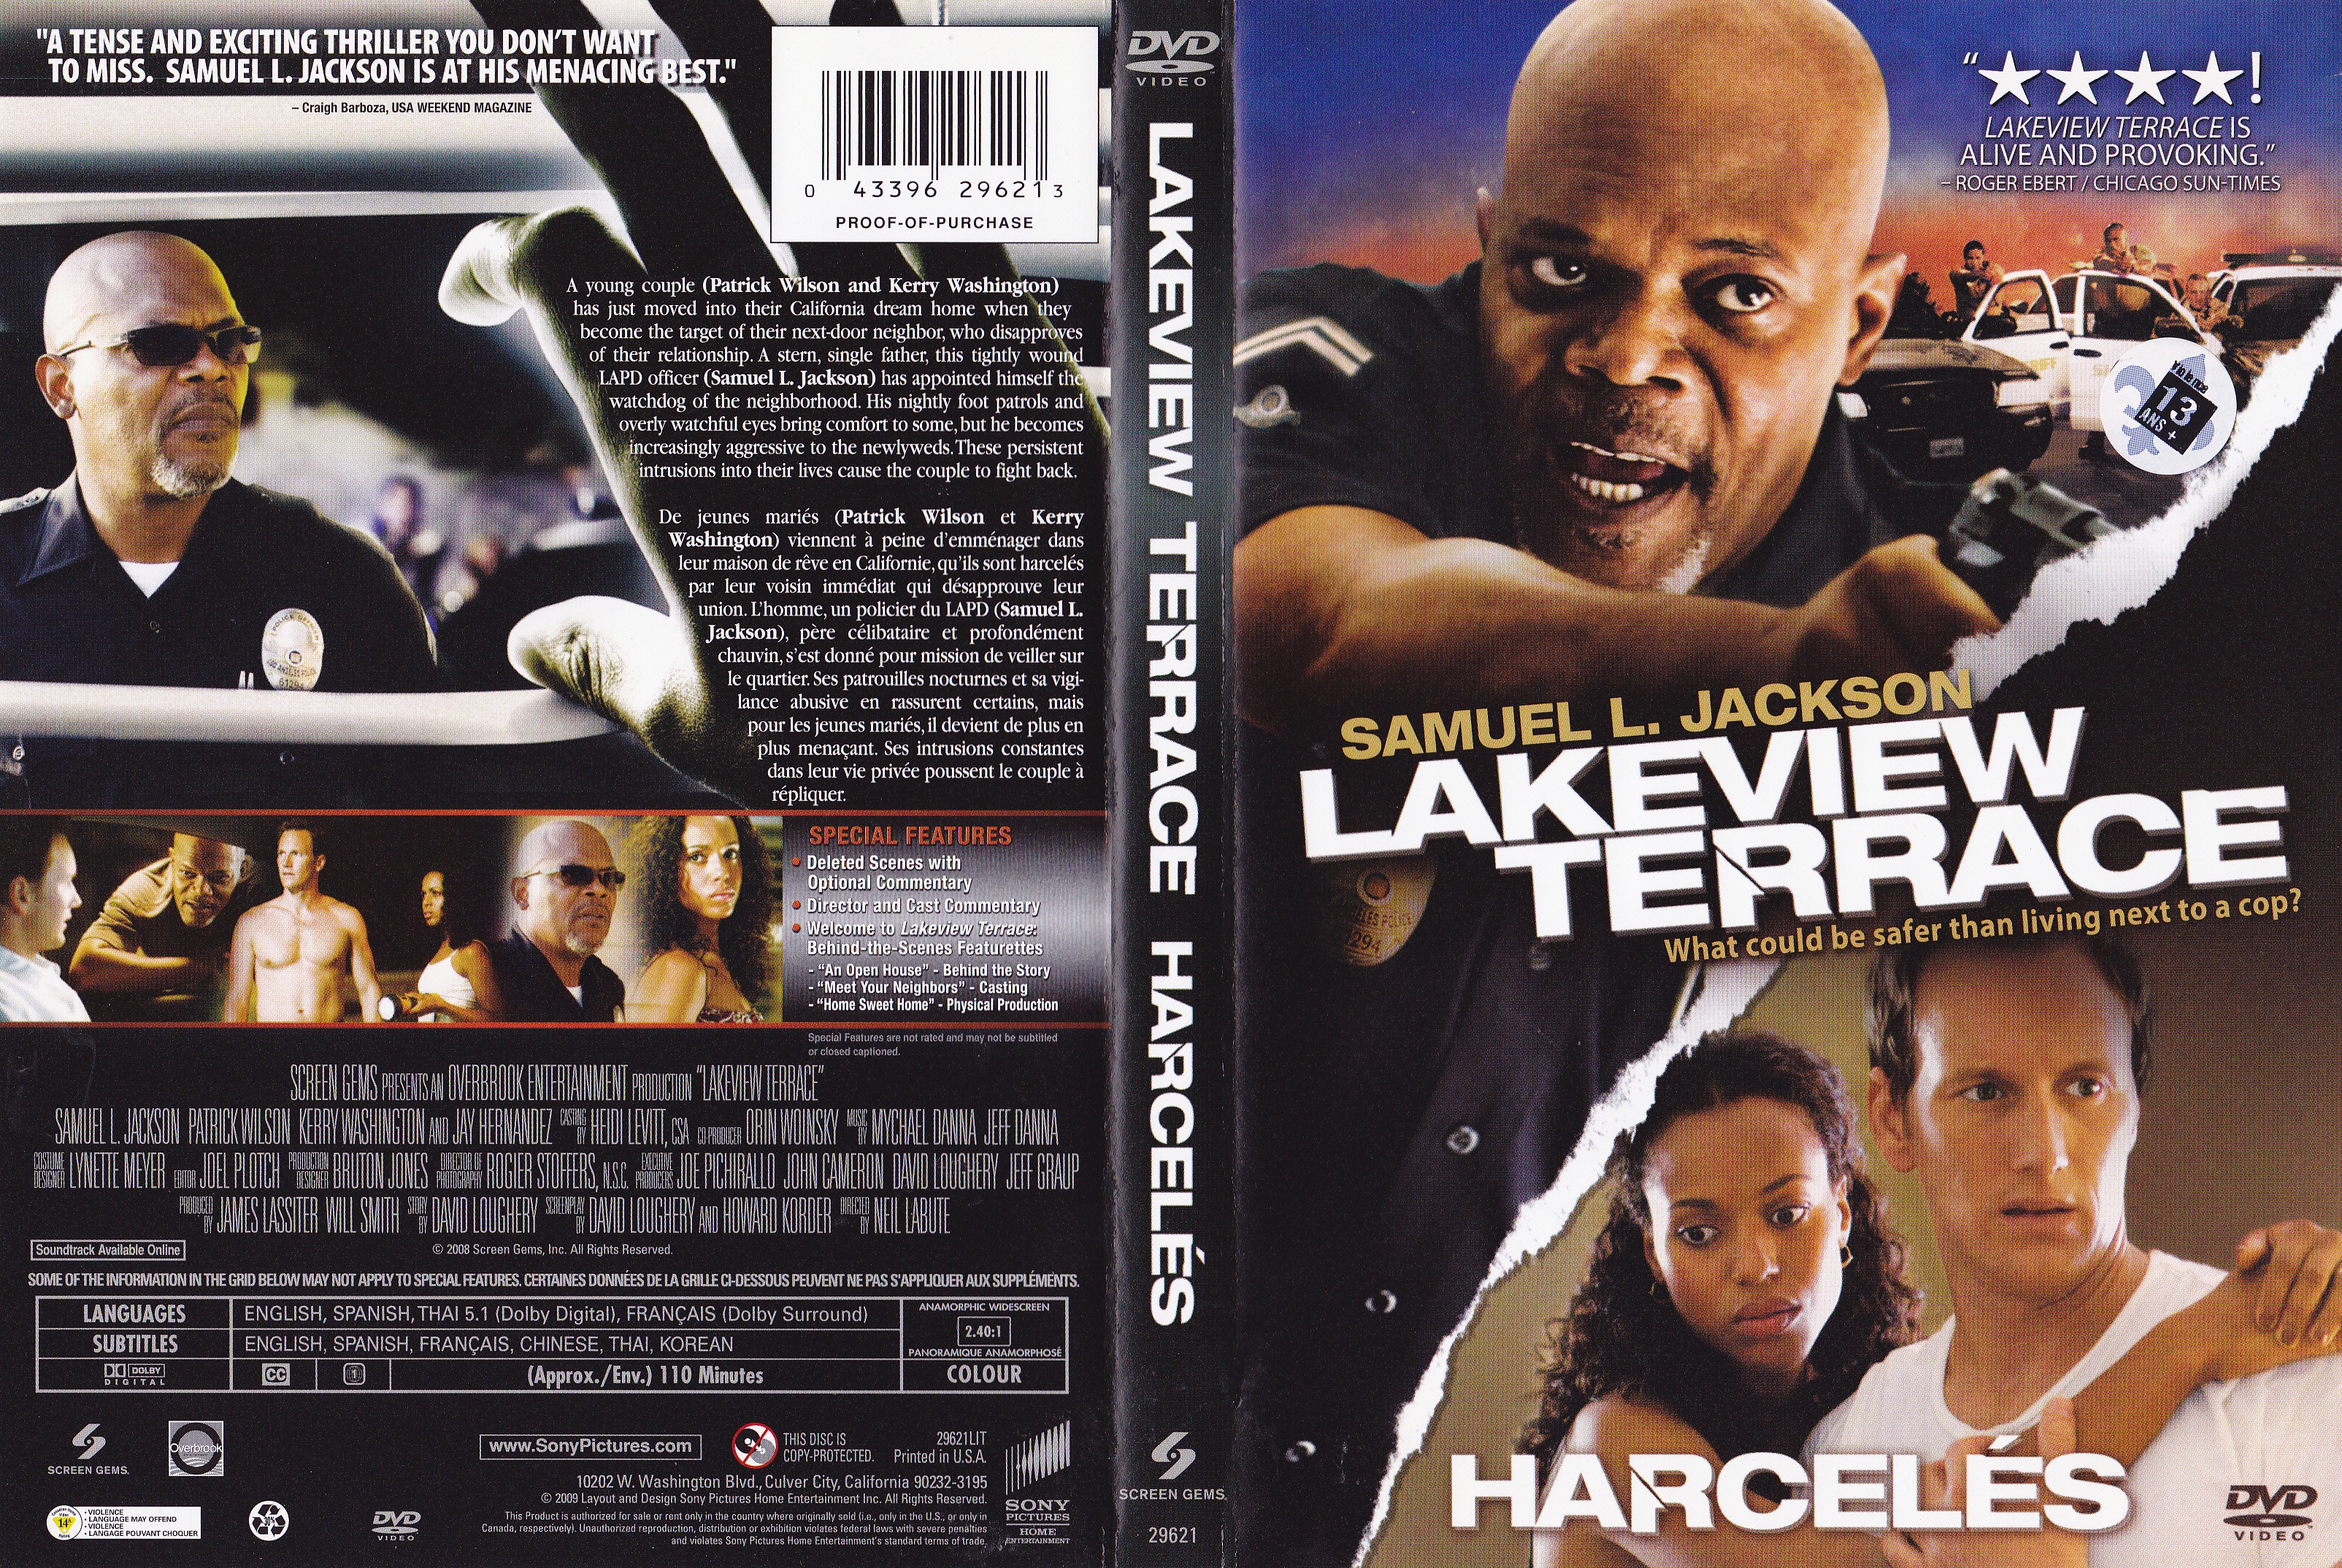 Jaquette DVD Lakeview terrace - Harcels (Canadienne)